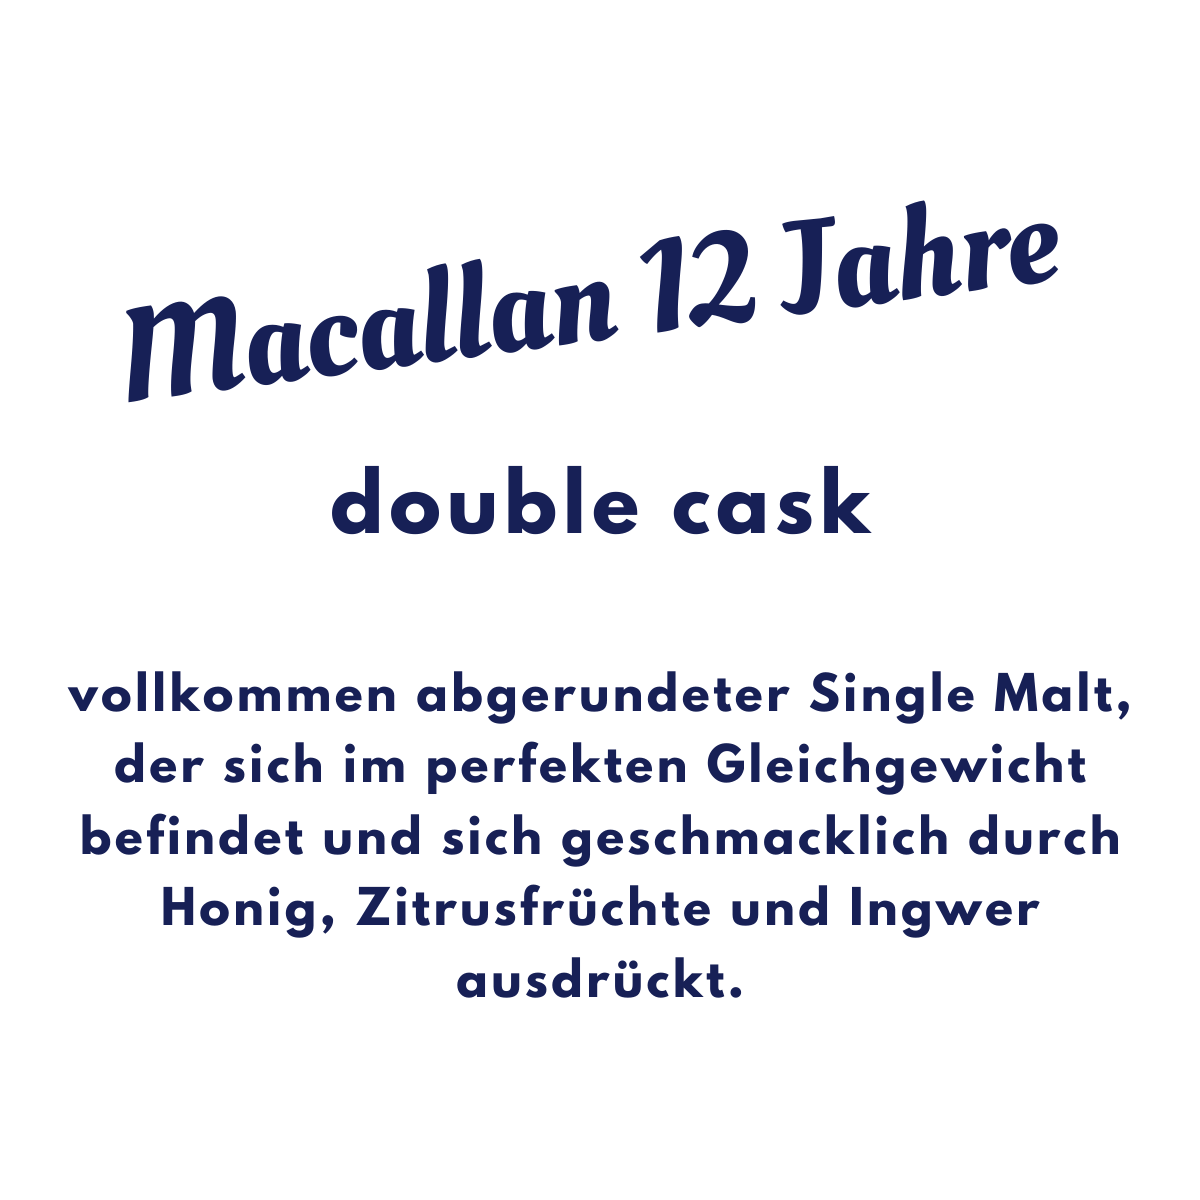 Macallan 12 Jahre double cask 40% Vol. / 0,7l  (Sammlerstück/Sonderregel)